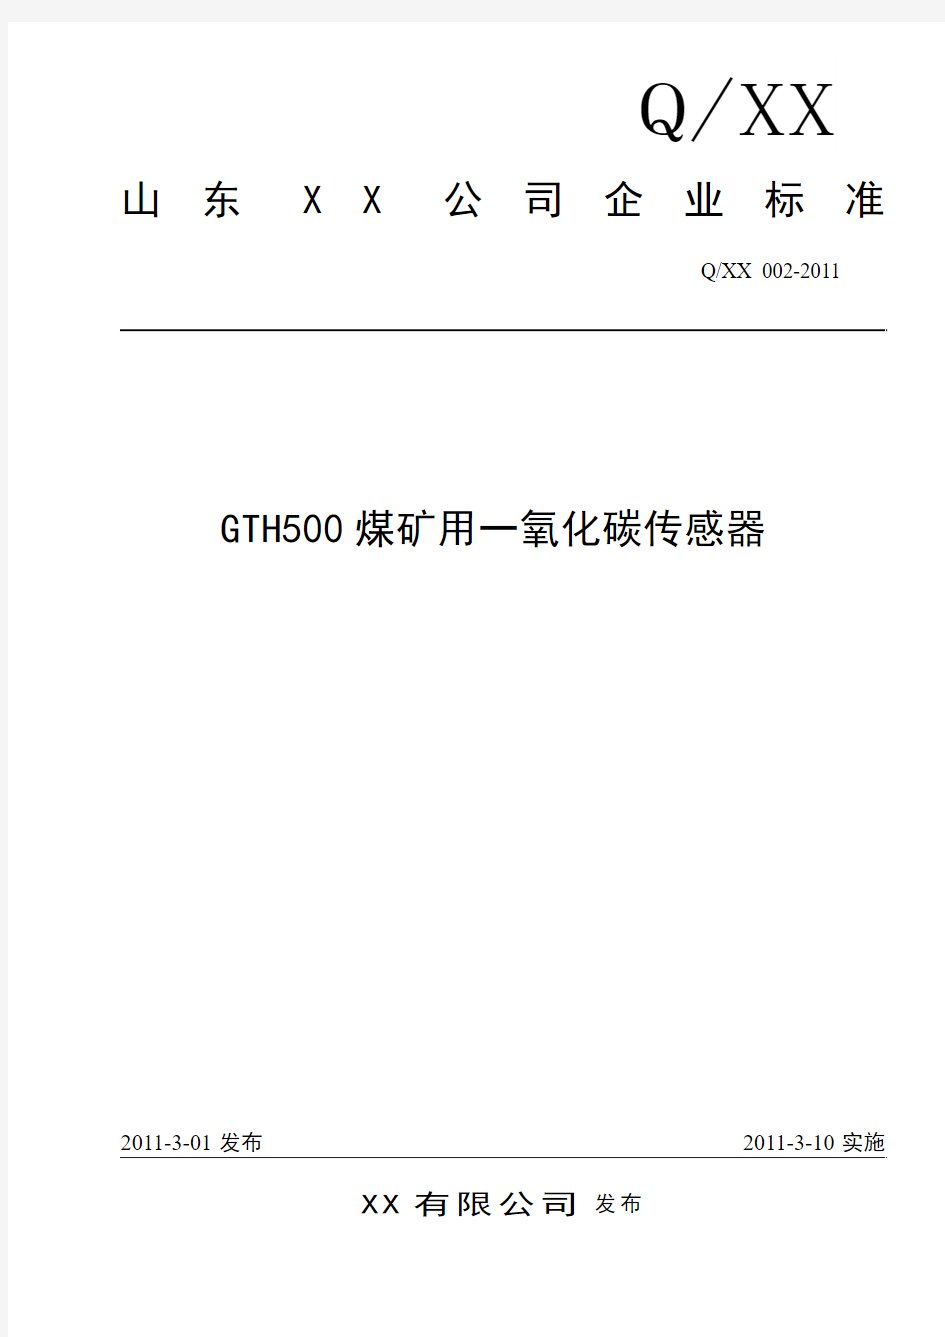 GTH500一氧化碳传感器产品标准